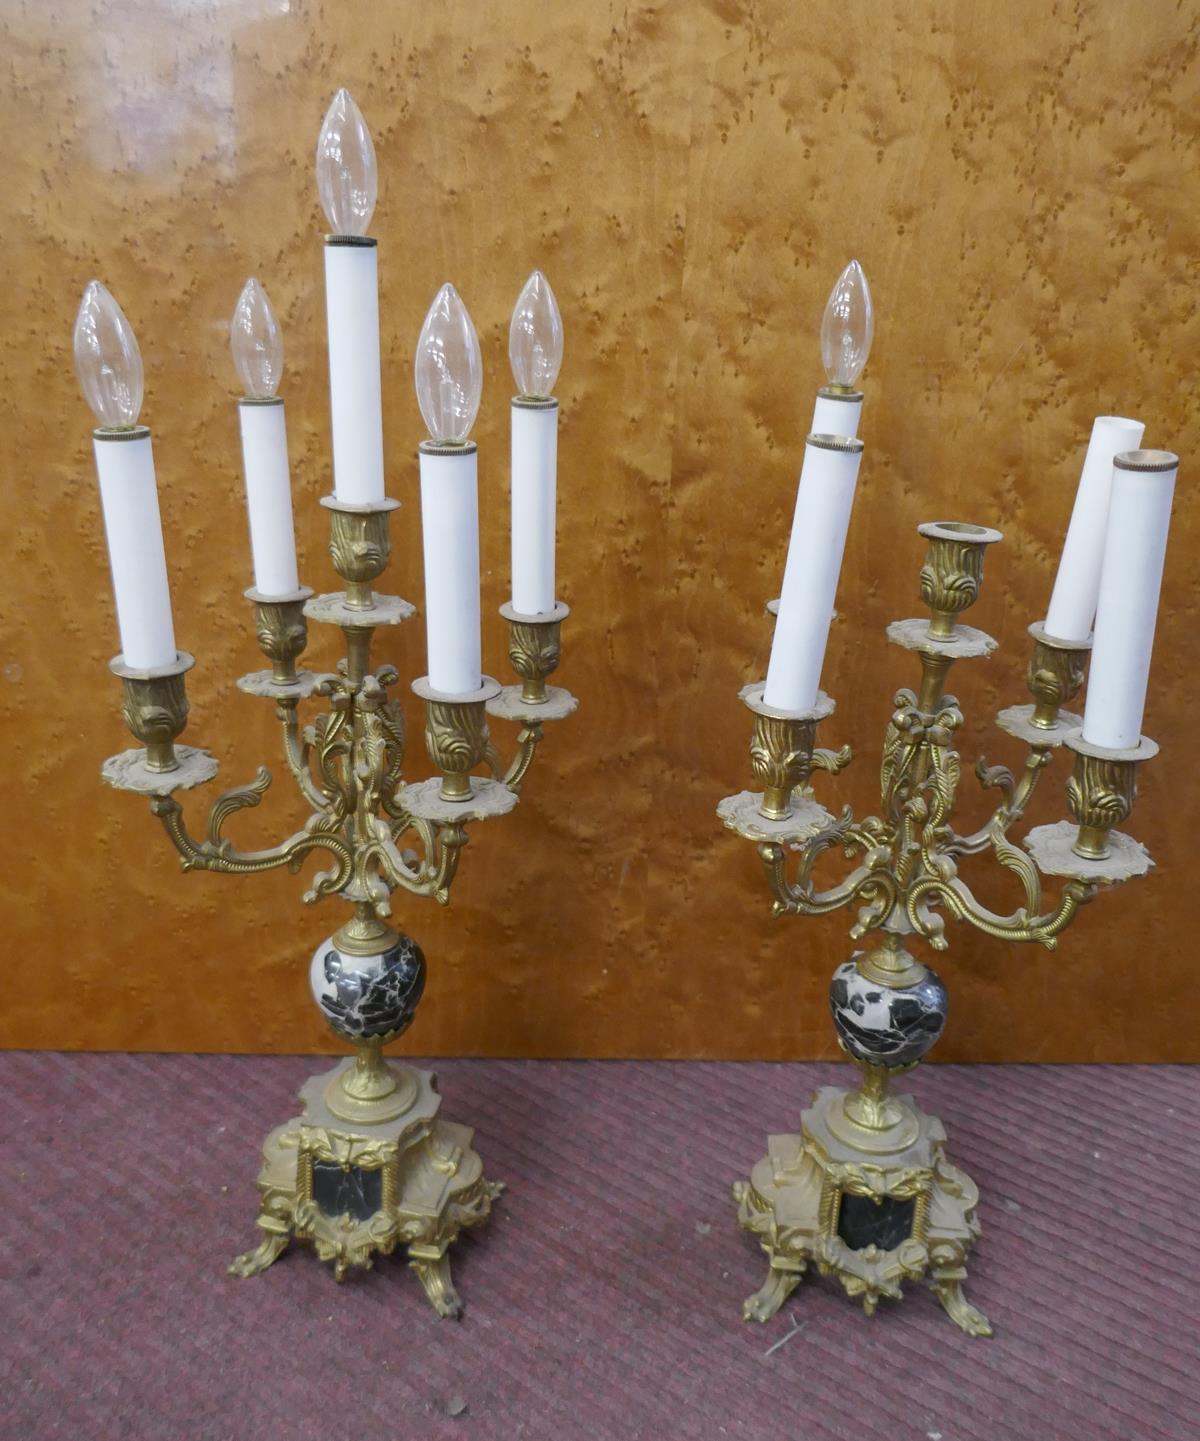 Pair of candelabra